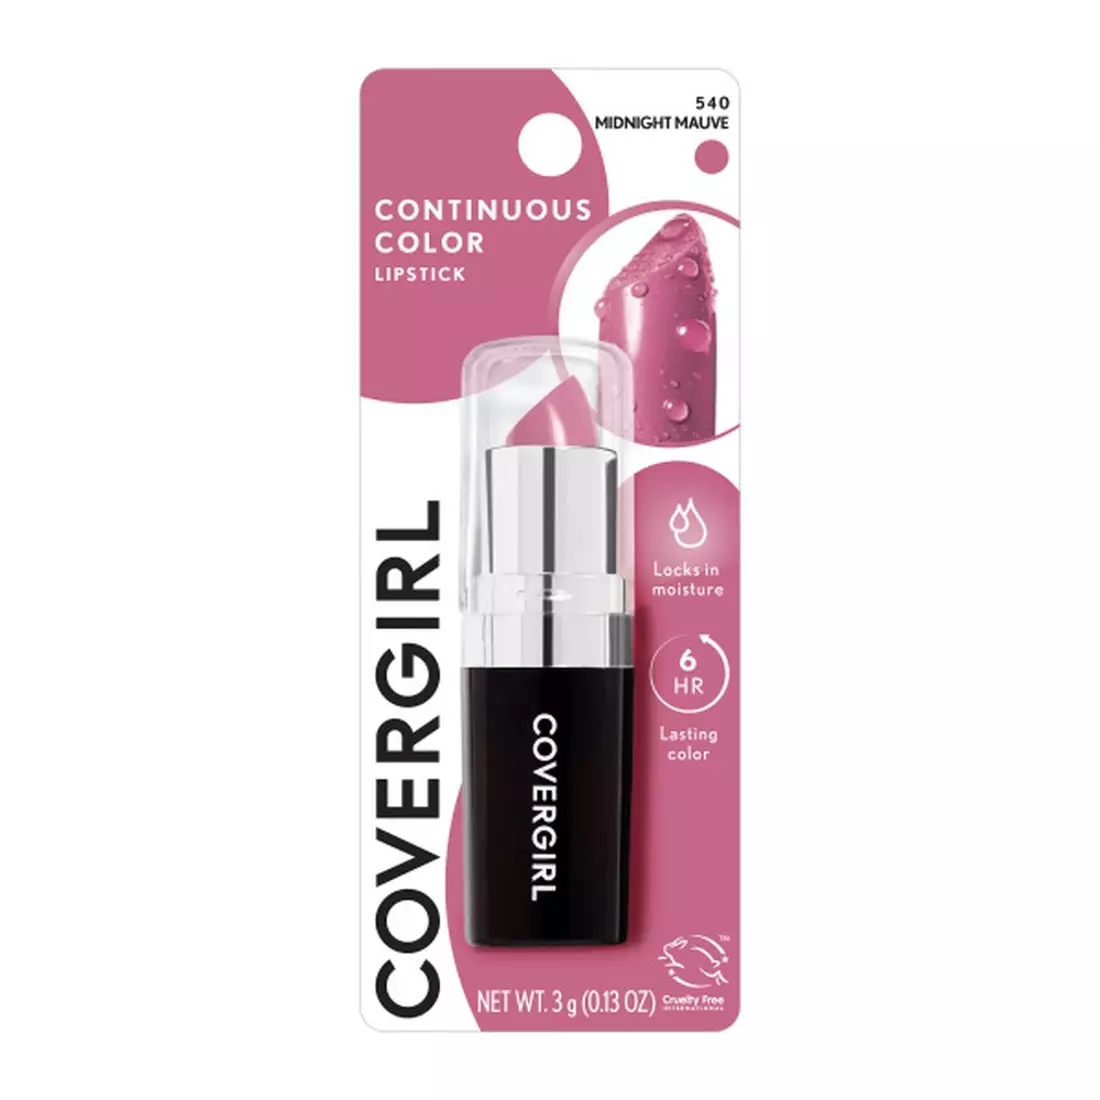 Covergirl Continuous Color Lipstick – Midnight Mauve